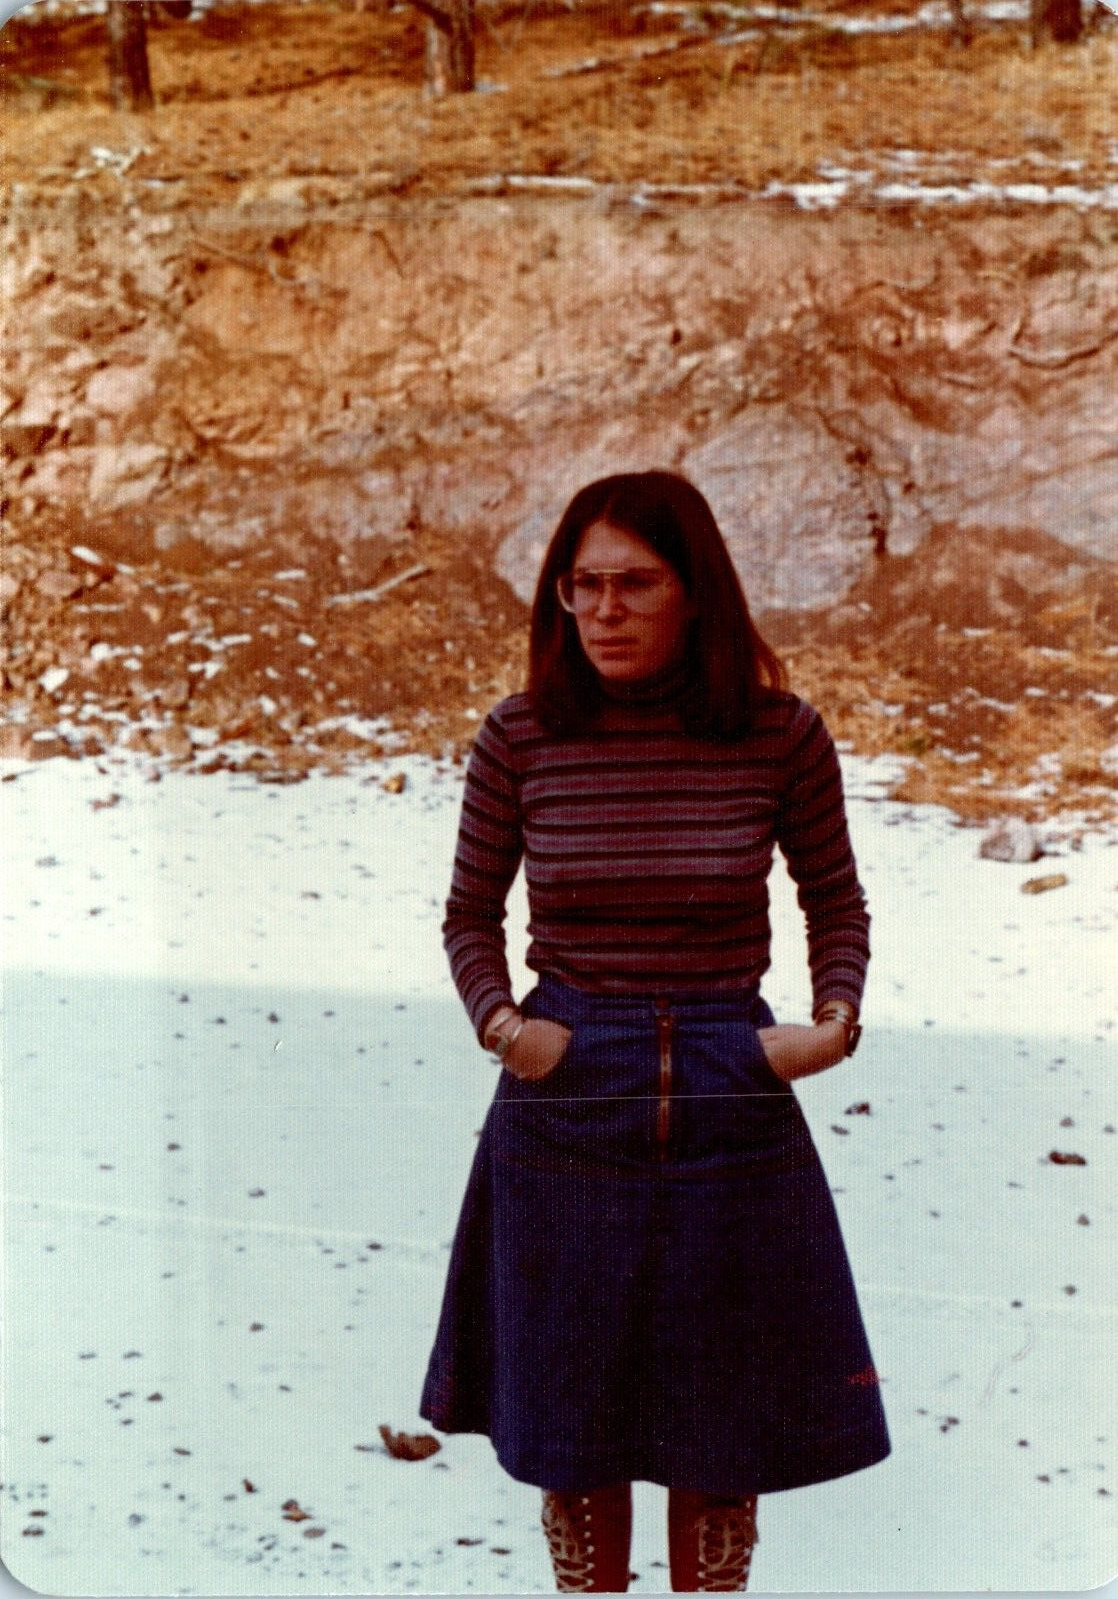 1970s Girl Standing in Snow Nerd Denim Skirt Retro Fashion Vintage Photo